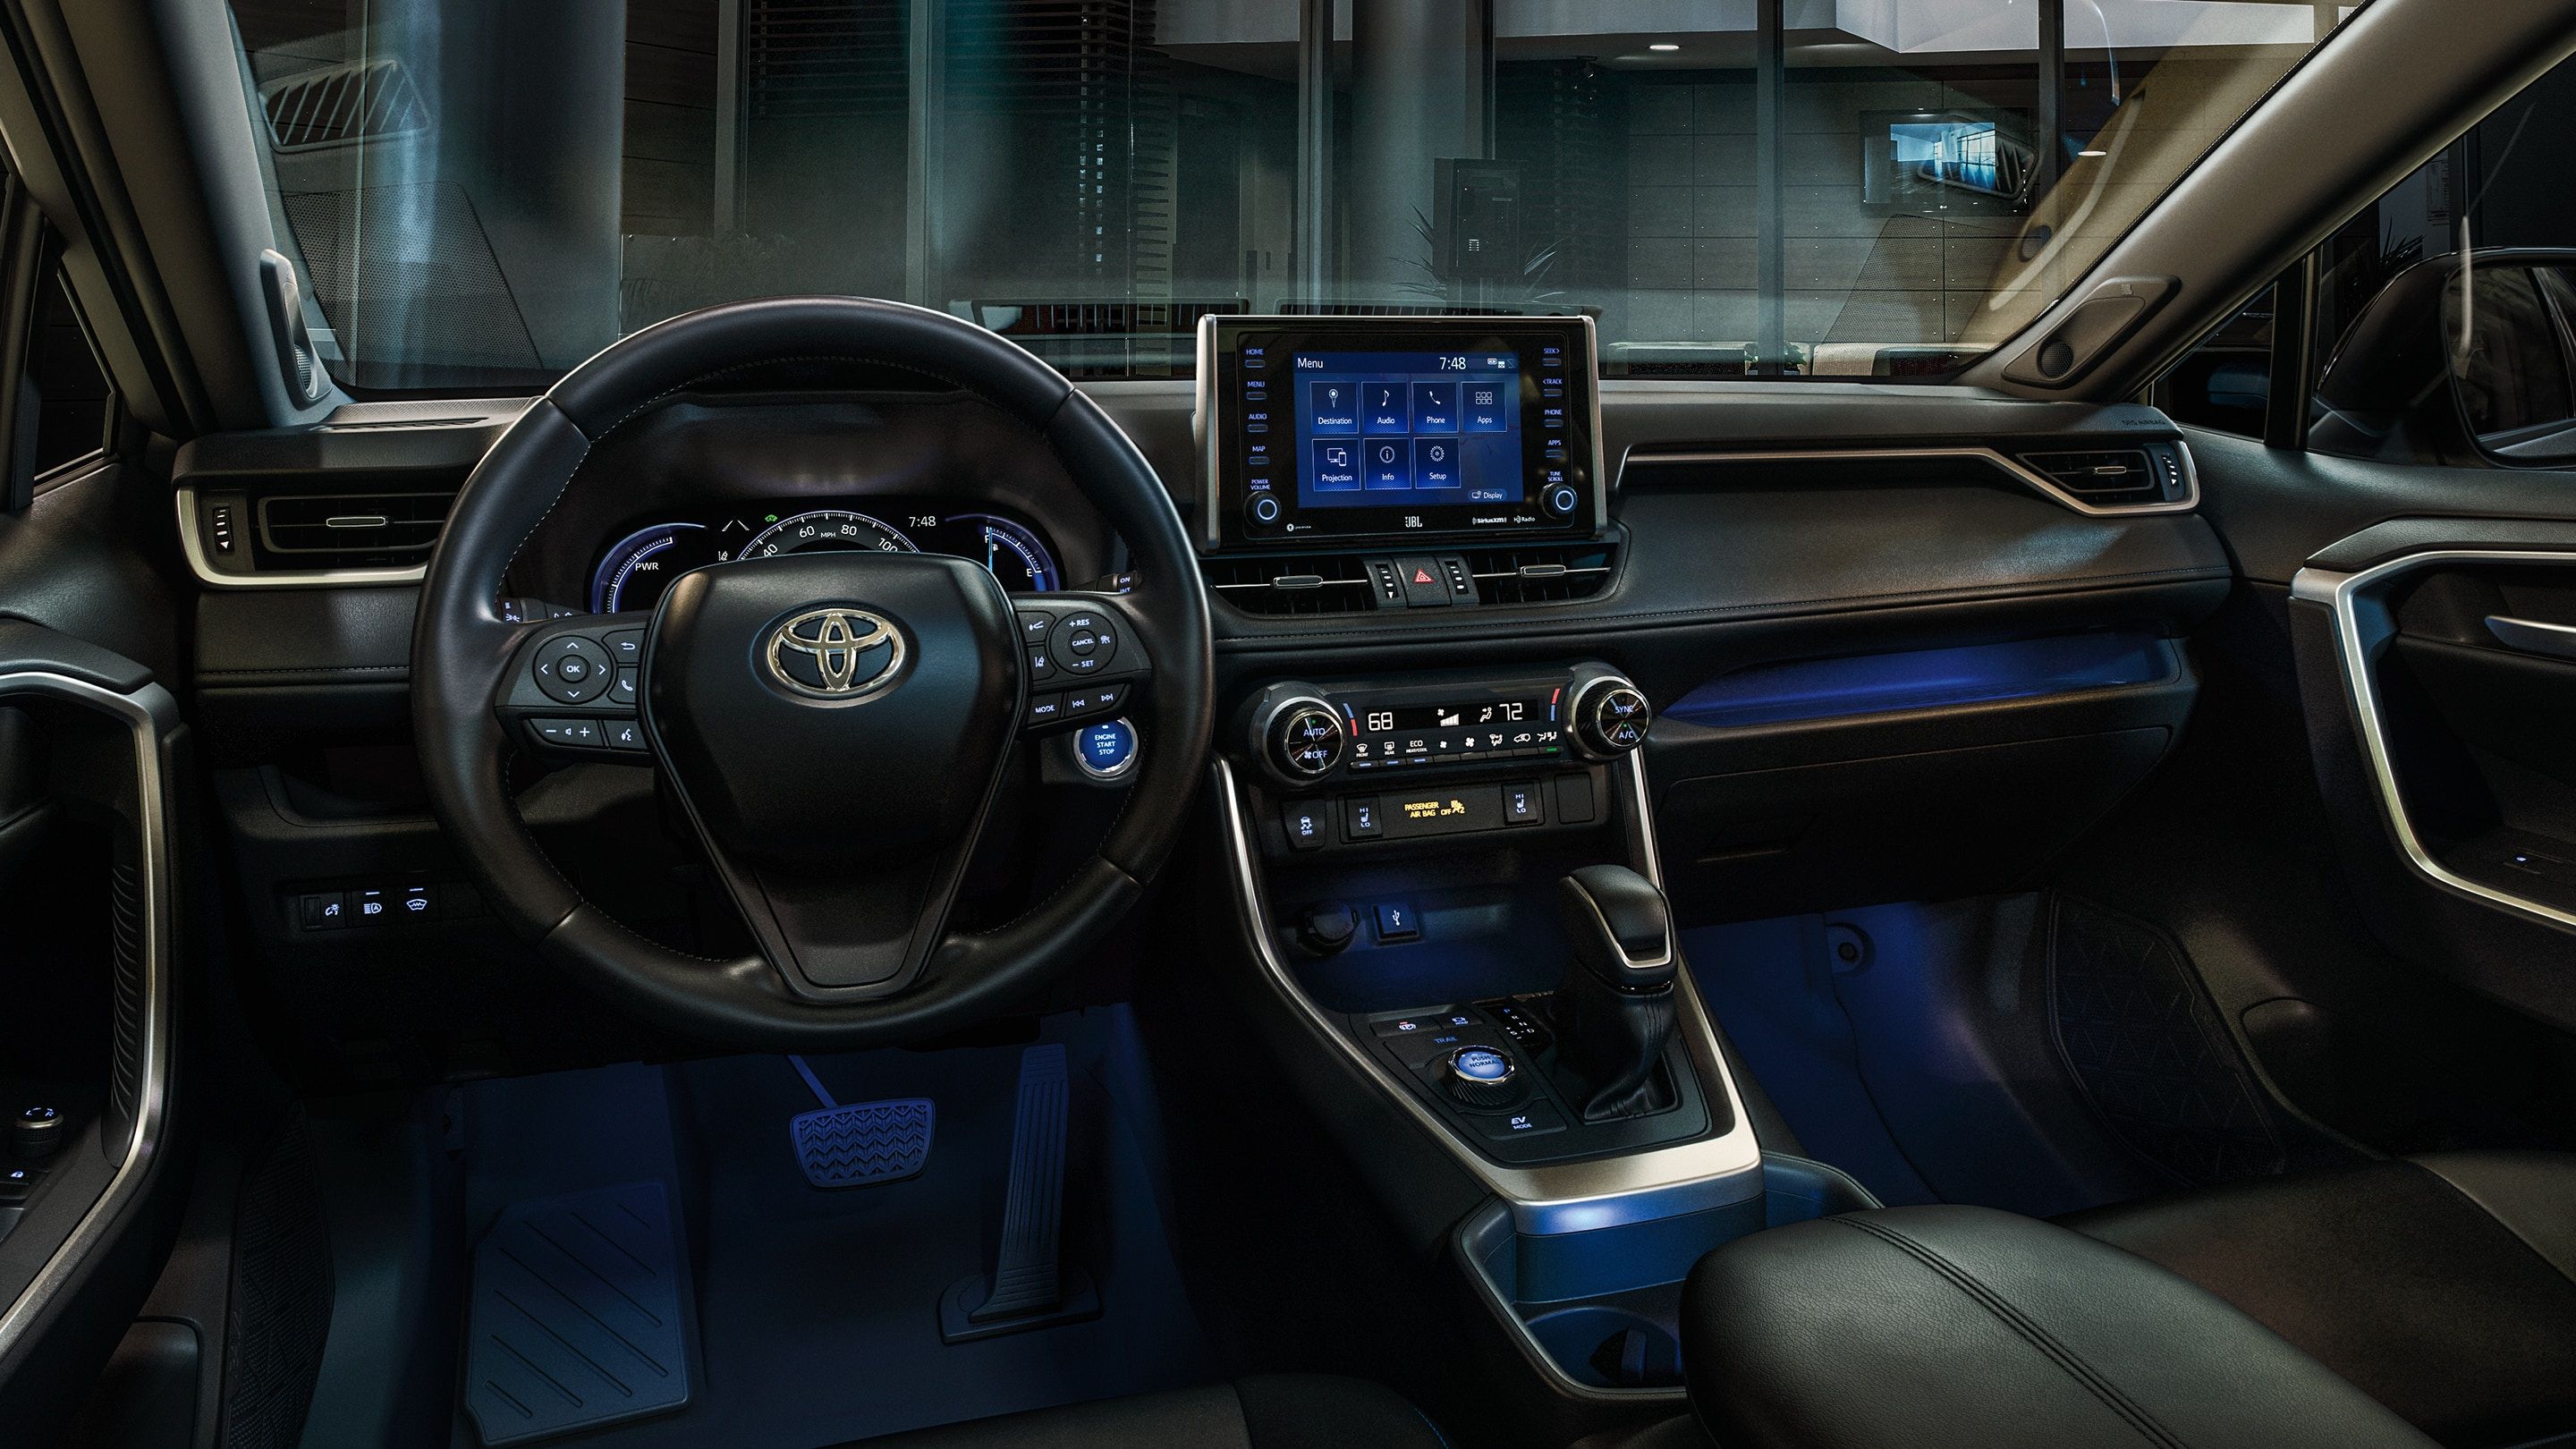 The 2021 Toyota Rav4 XSE interior